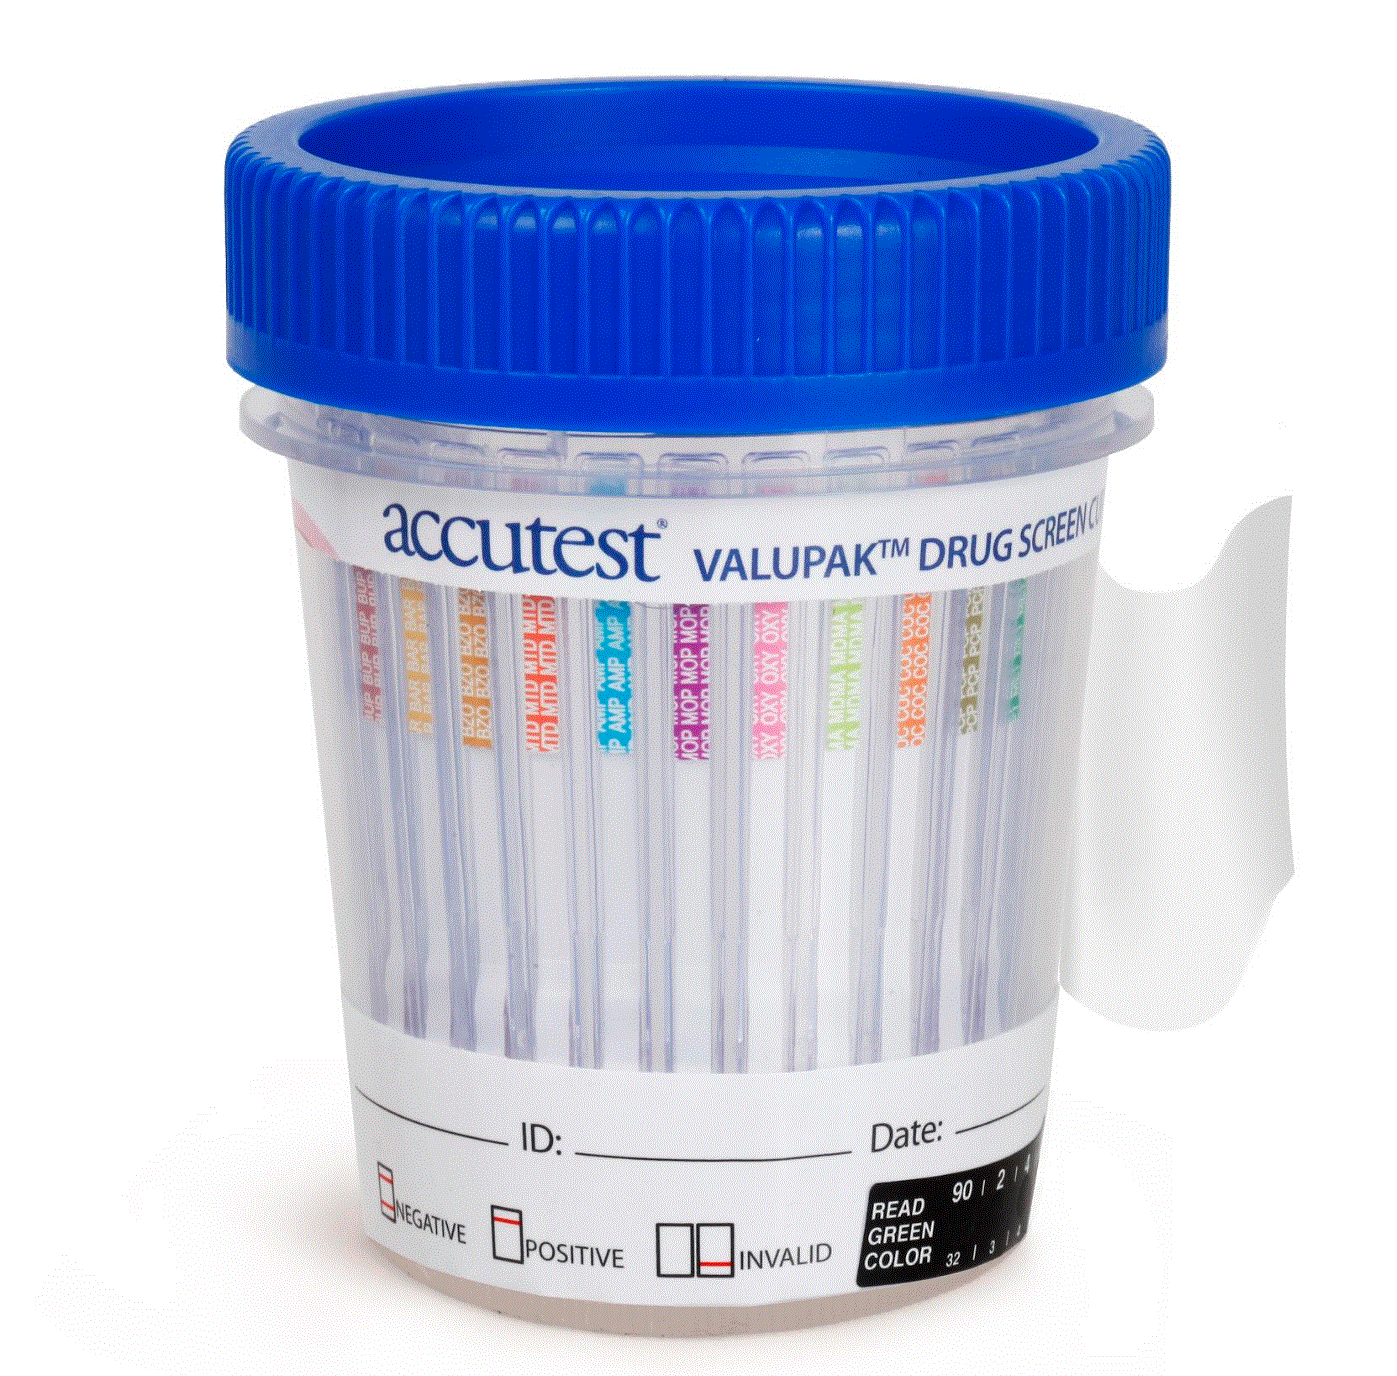 accutest-valupak-drug-test-cup12 Panel Urine Adulteration Test